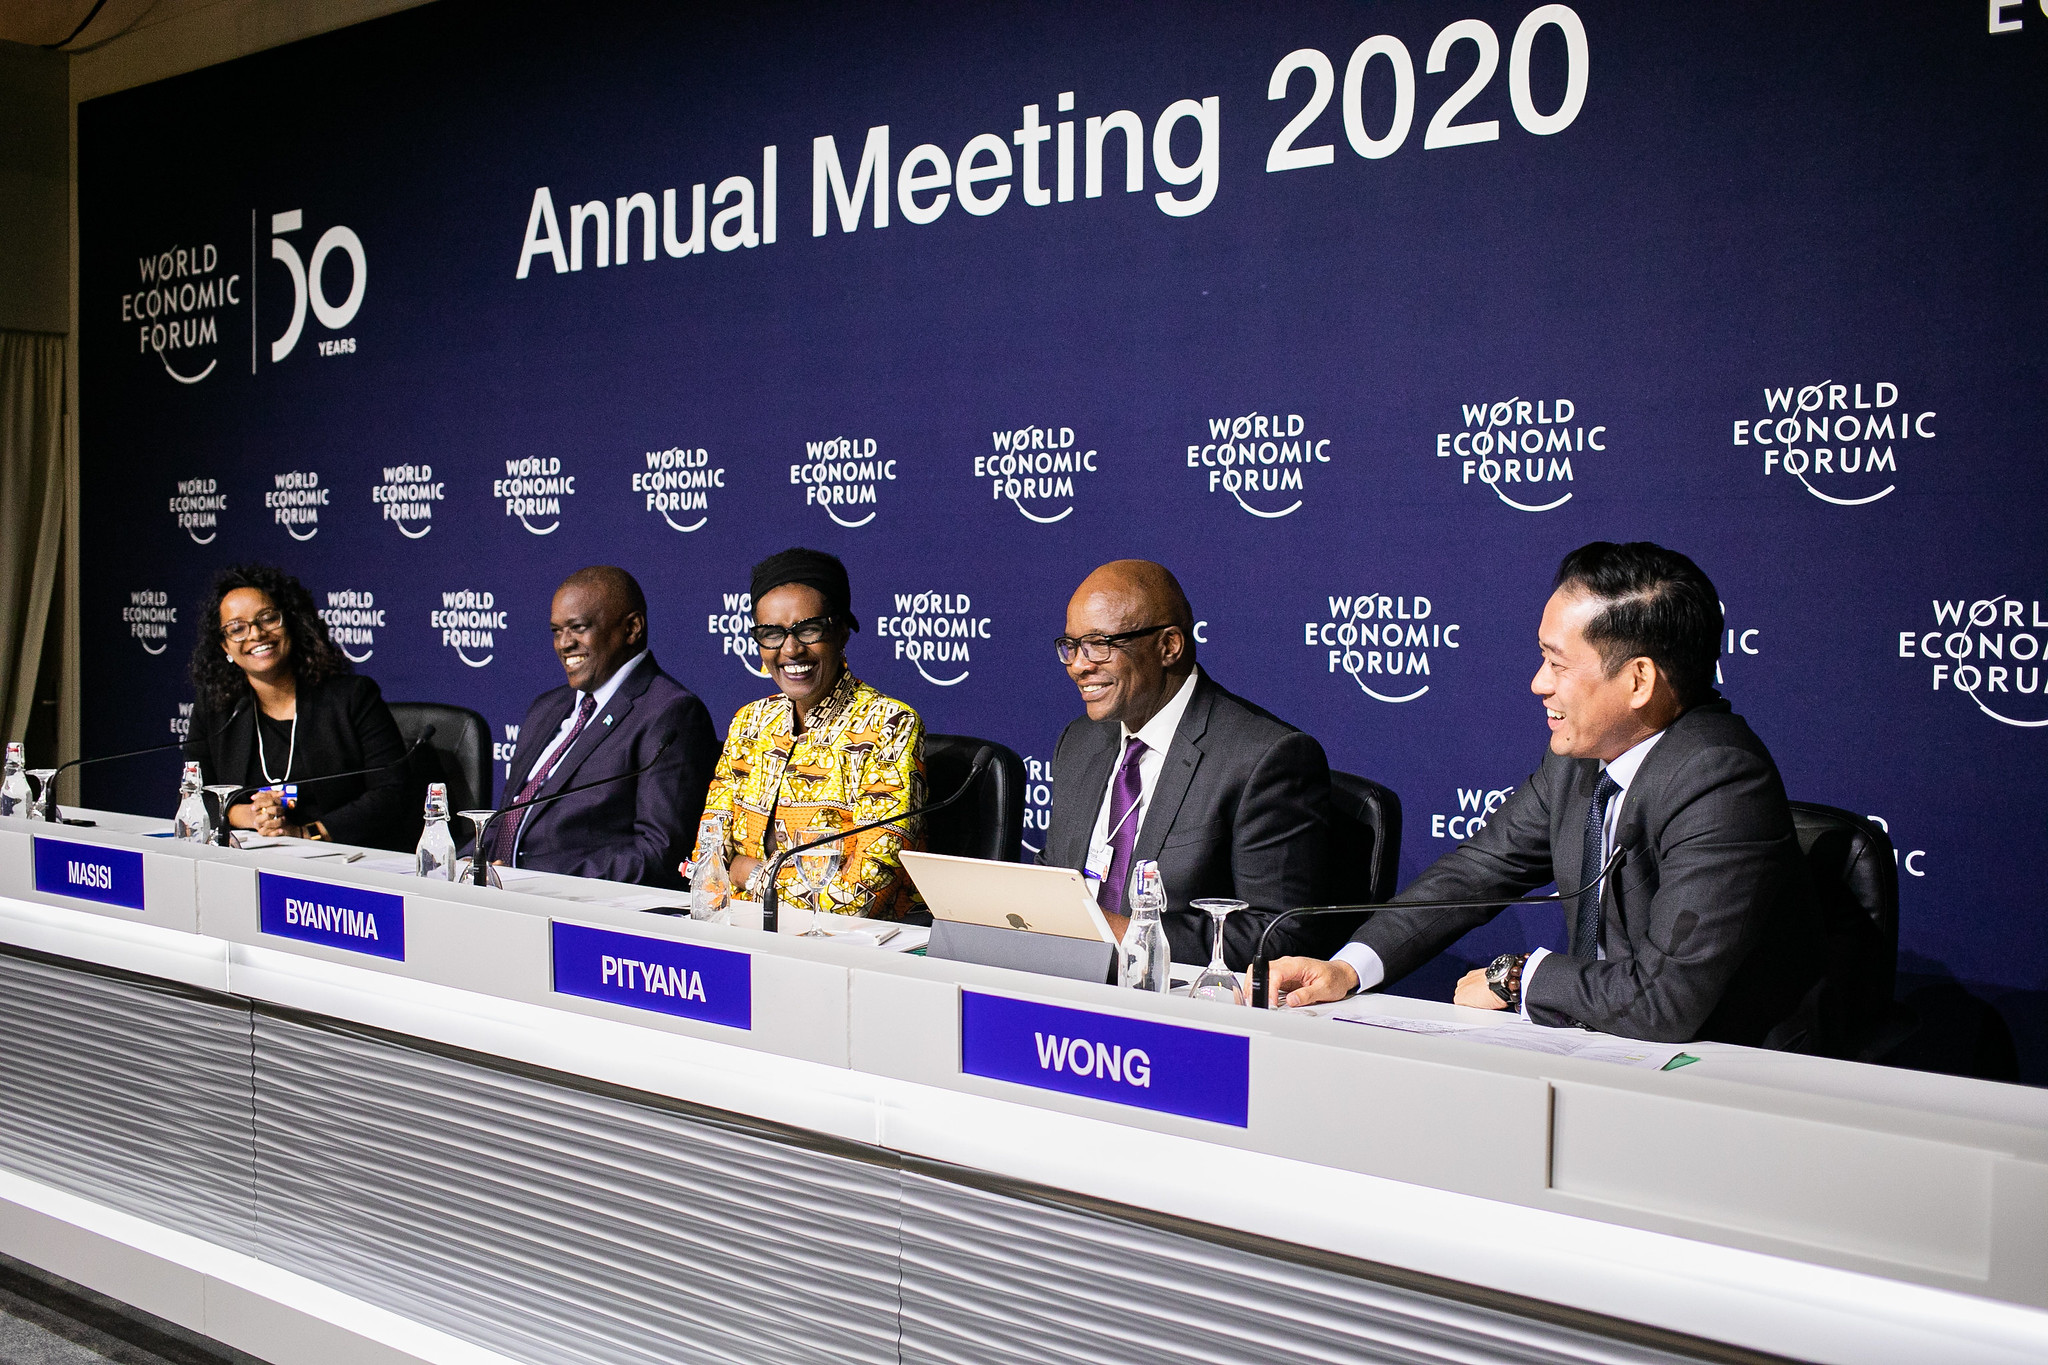 World Economic Forum Annual Meeting 2020